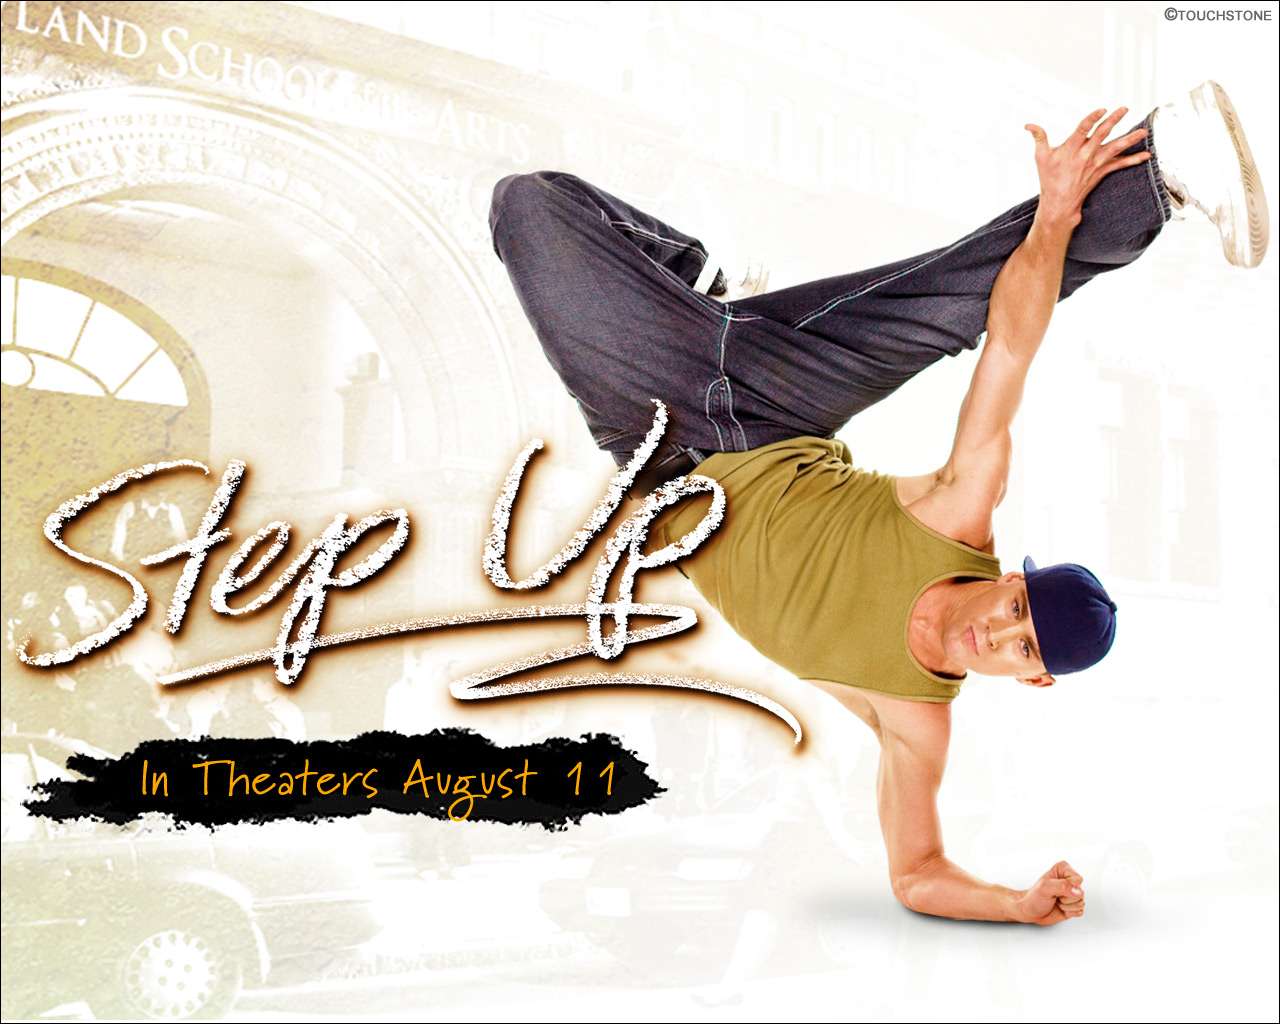 Step Up Wallpaper - Channing Tatum Movies Step Up - HD Wallpaper 